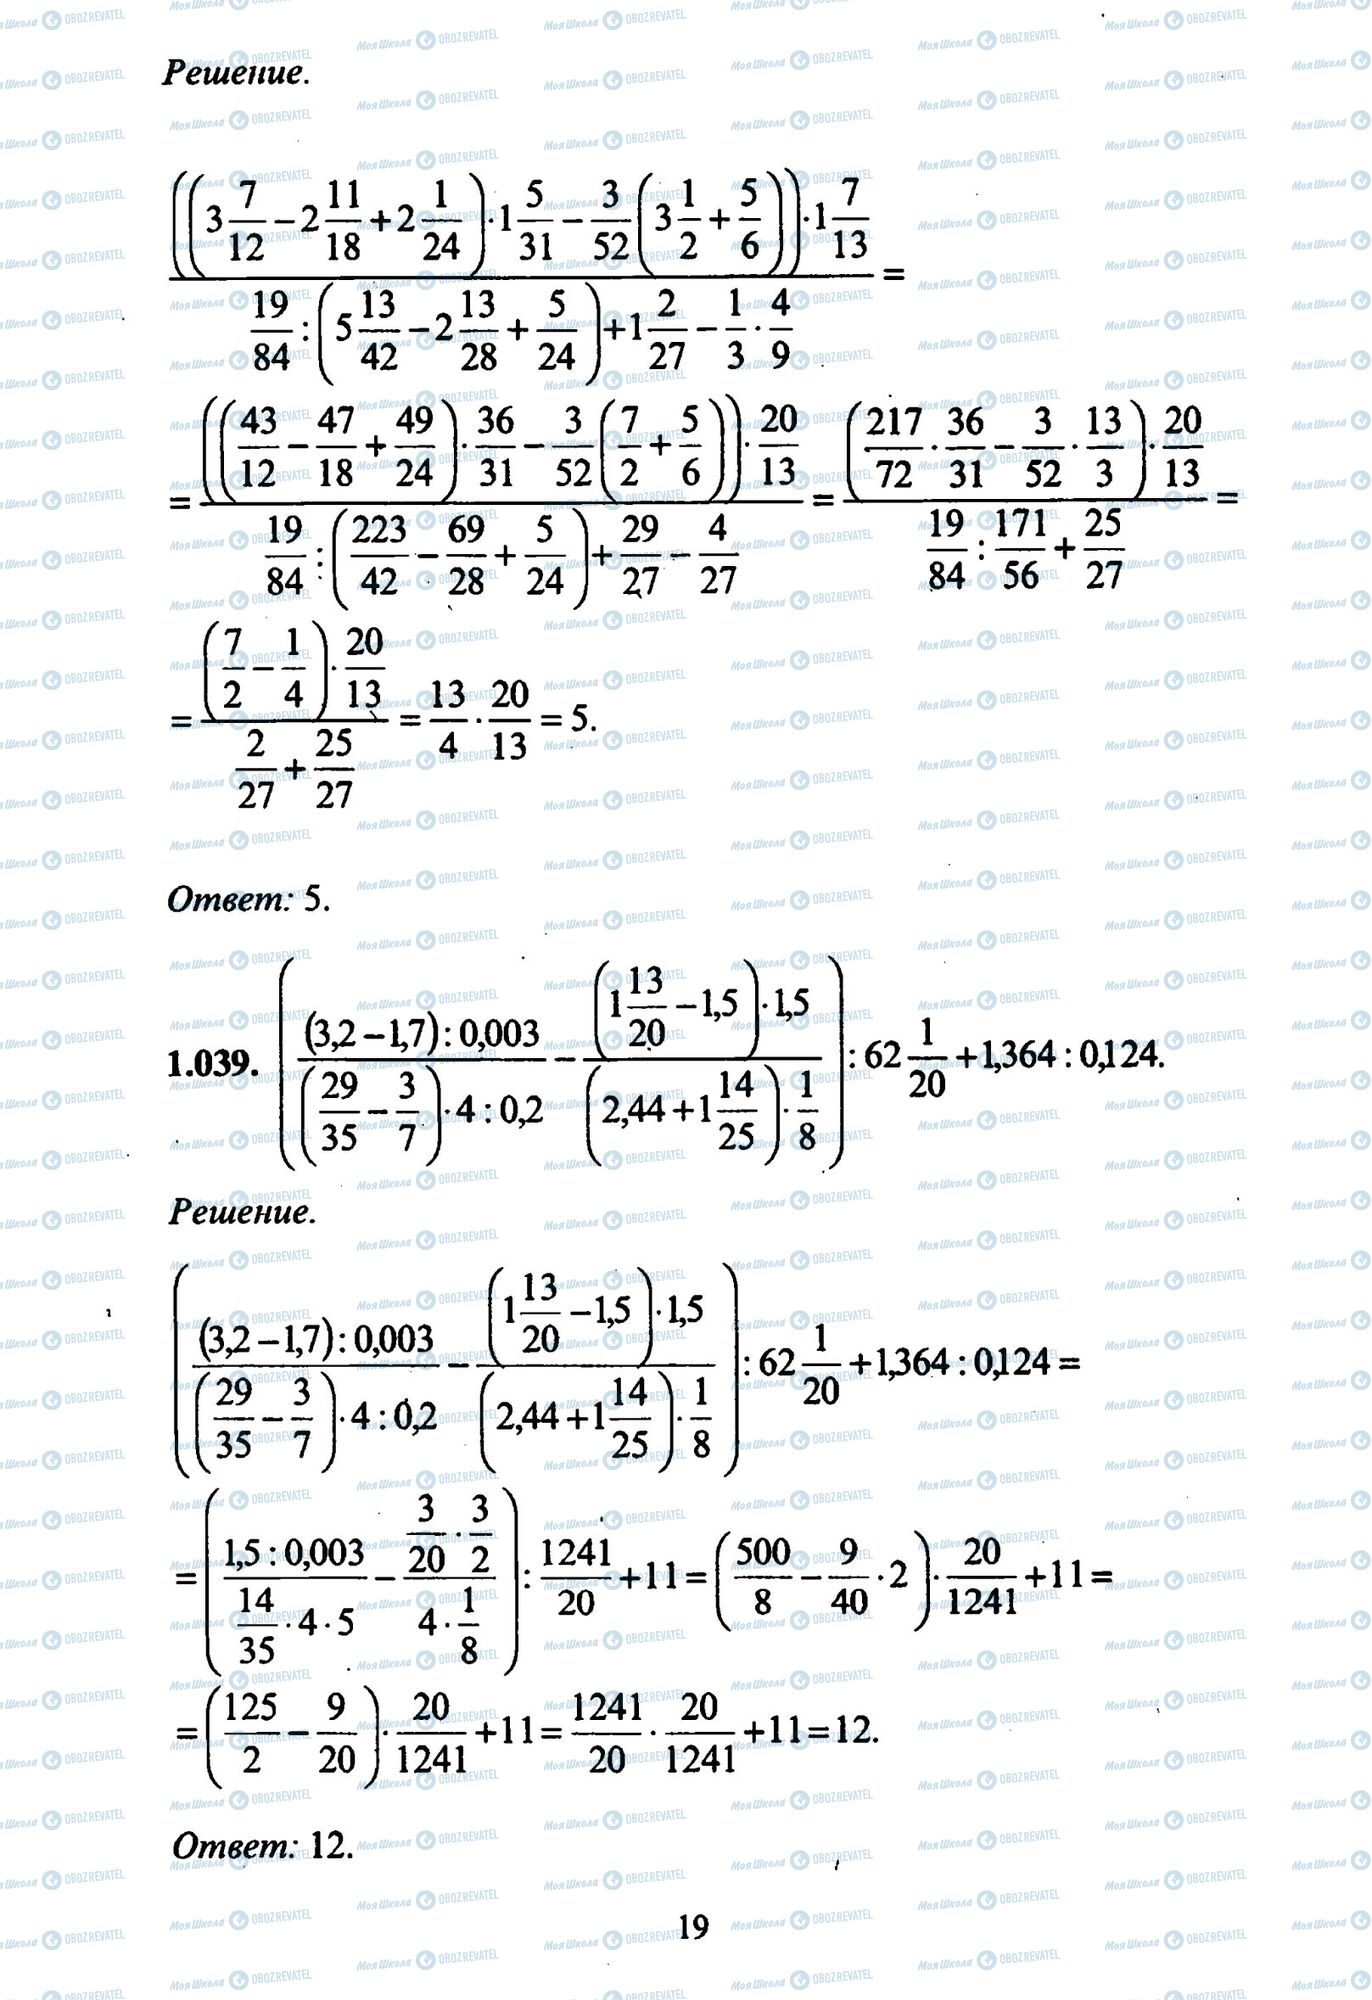 ЗНО Математика 11 класс страница 39